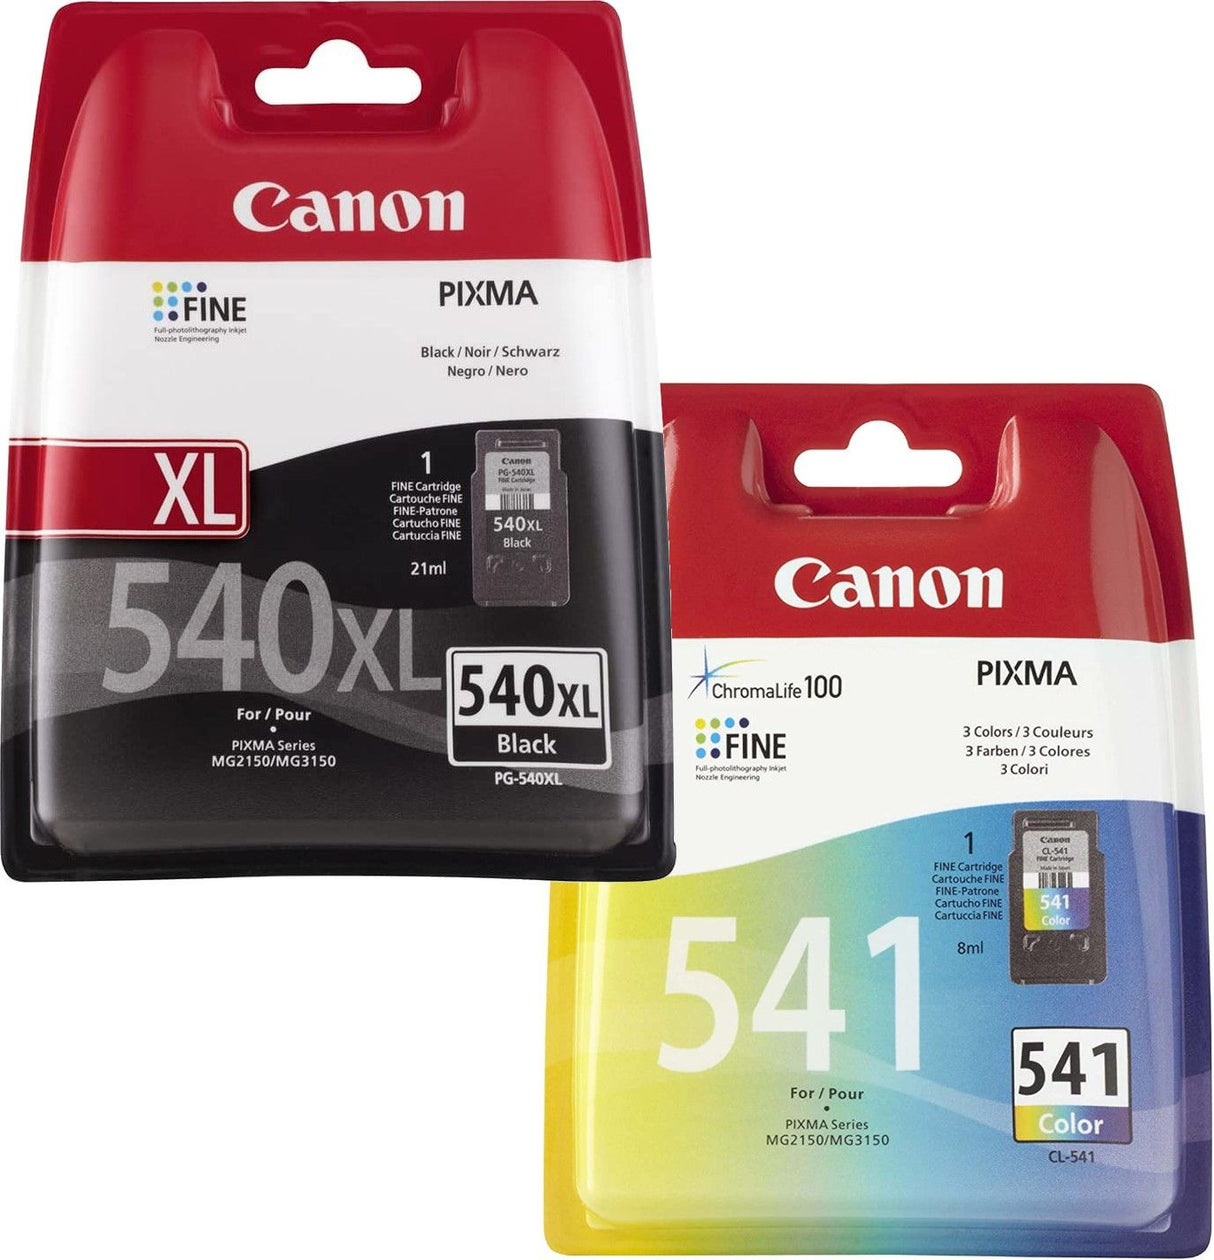 Canon PG-540XL Black and CL-541 Colour Ink Cartridge Bundle Pack